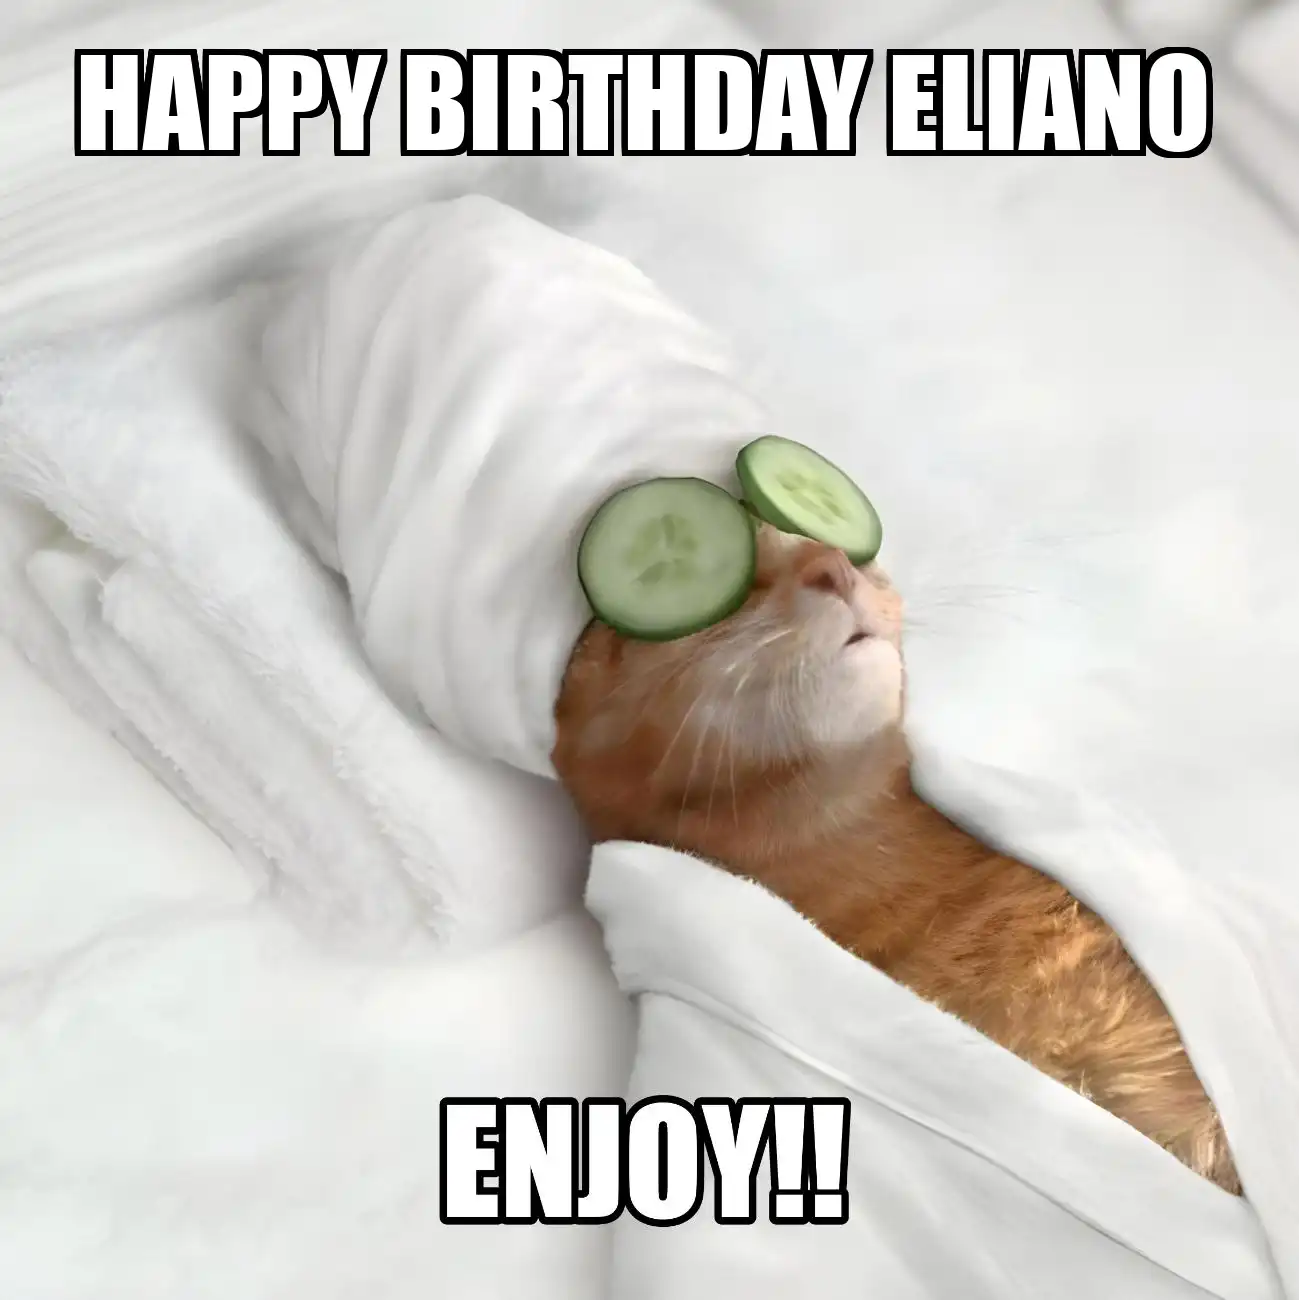 Happy Birthday Eliano Enjoy Cat Meme